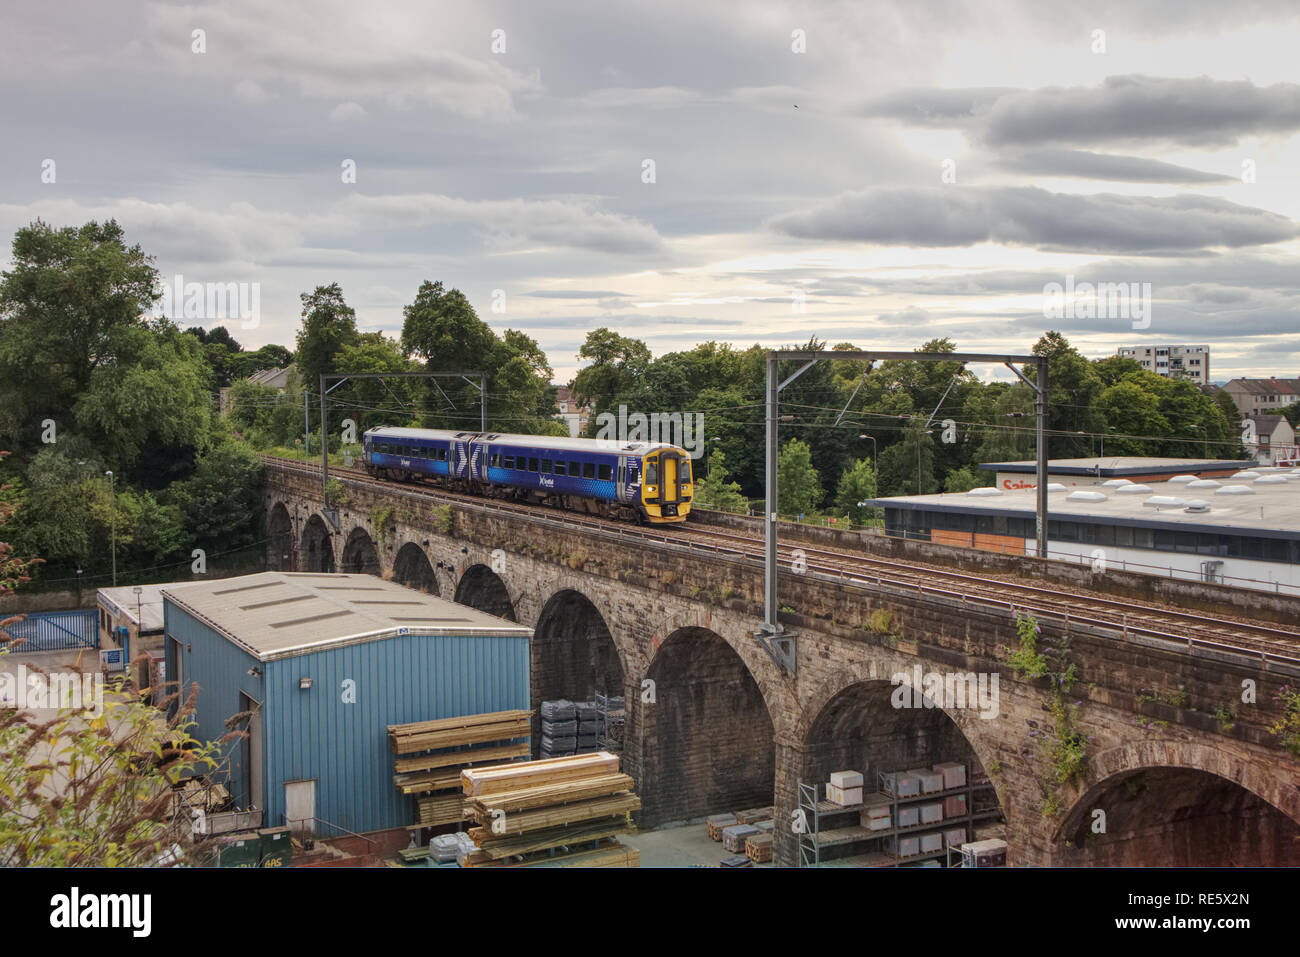 Edinburgh, Scotland / United Kingdom - August 4 2018: A Scotrail train British Rail DMU Class 158 Express Sprinter is travelling at speed over an old Stock Photo